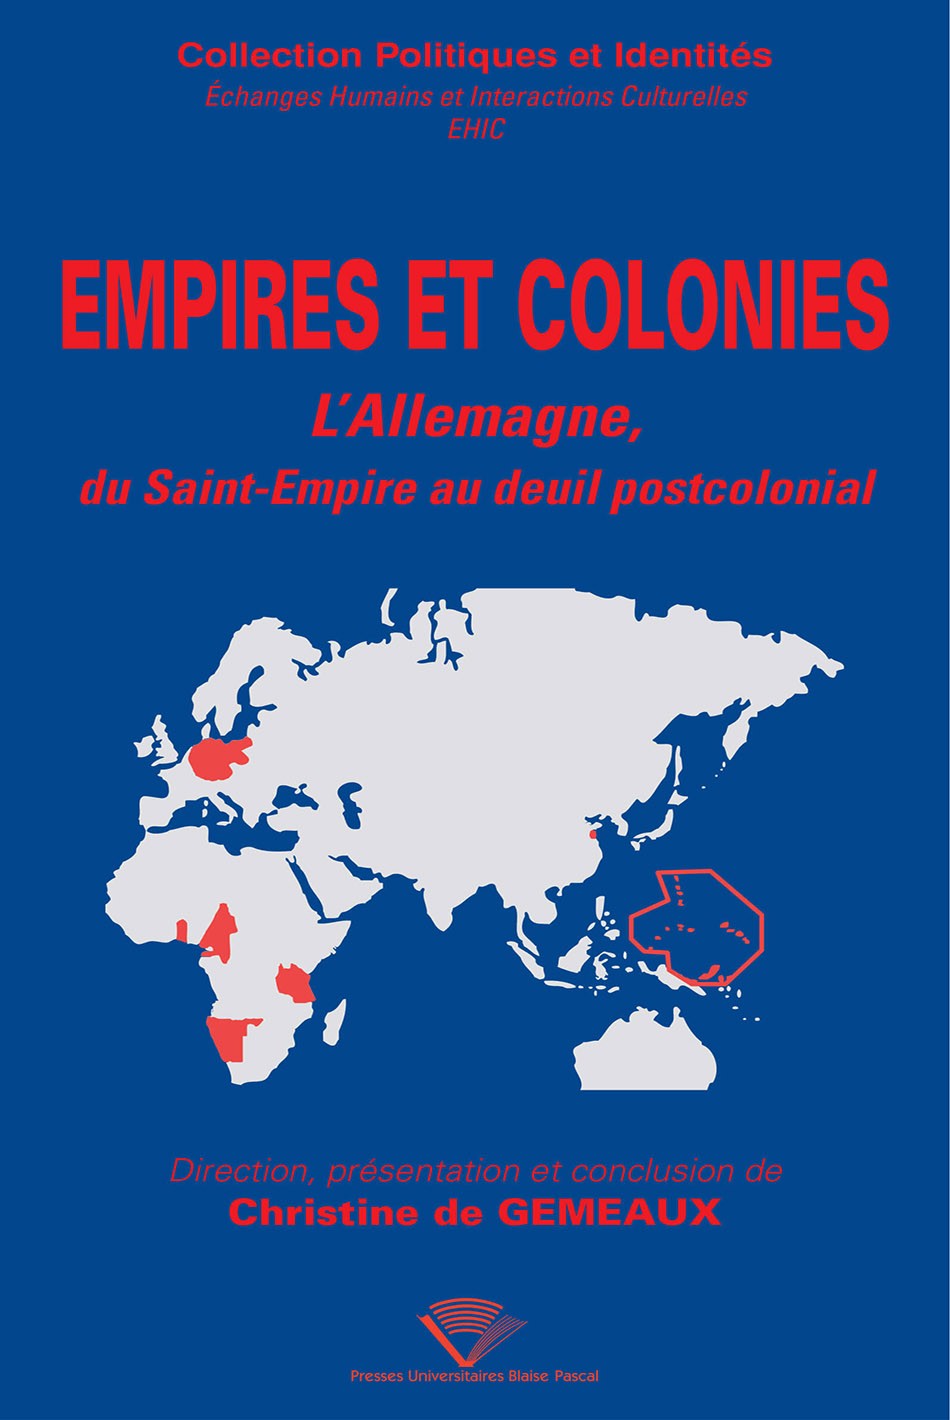 Empires et colonies